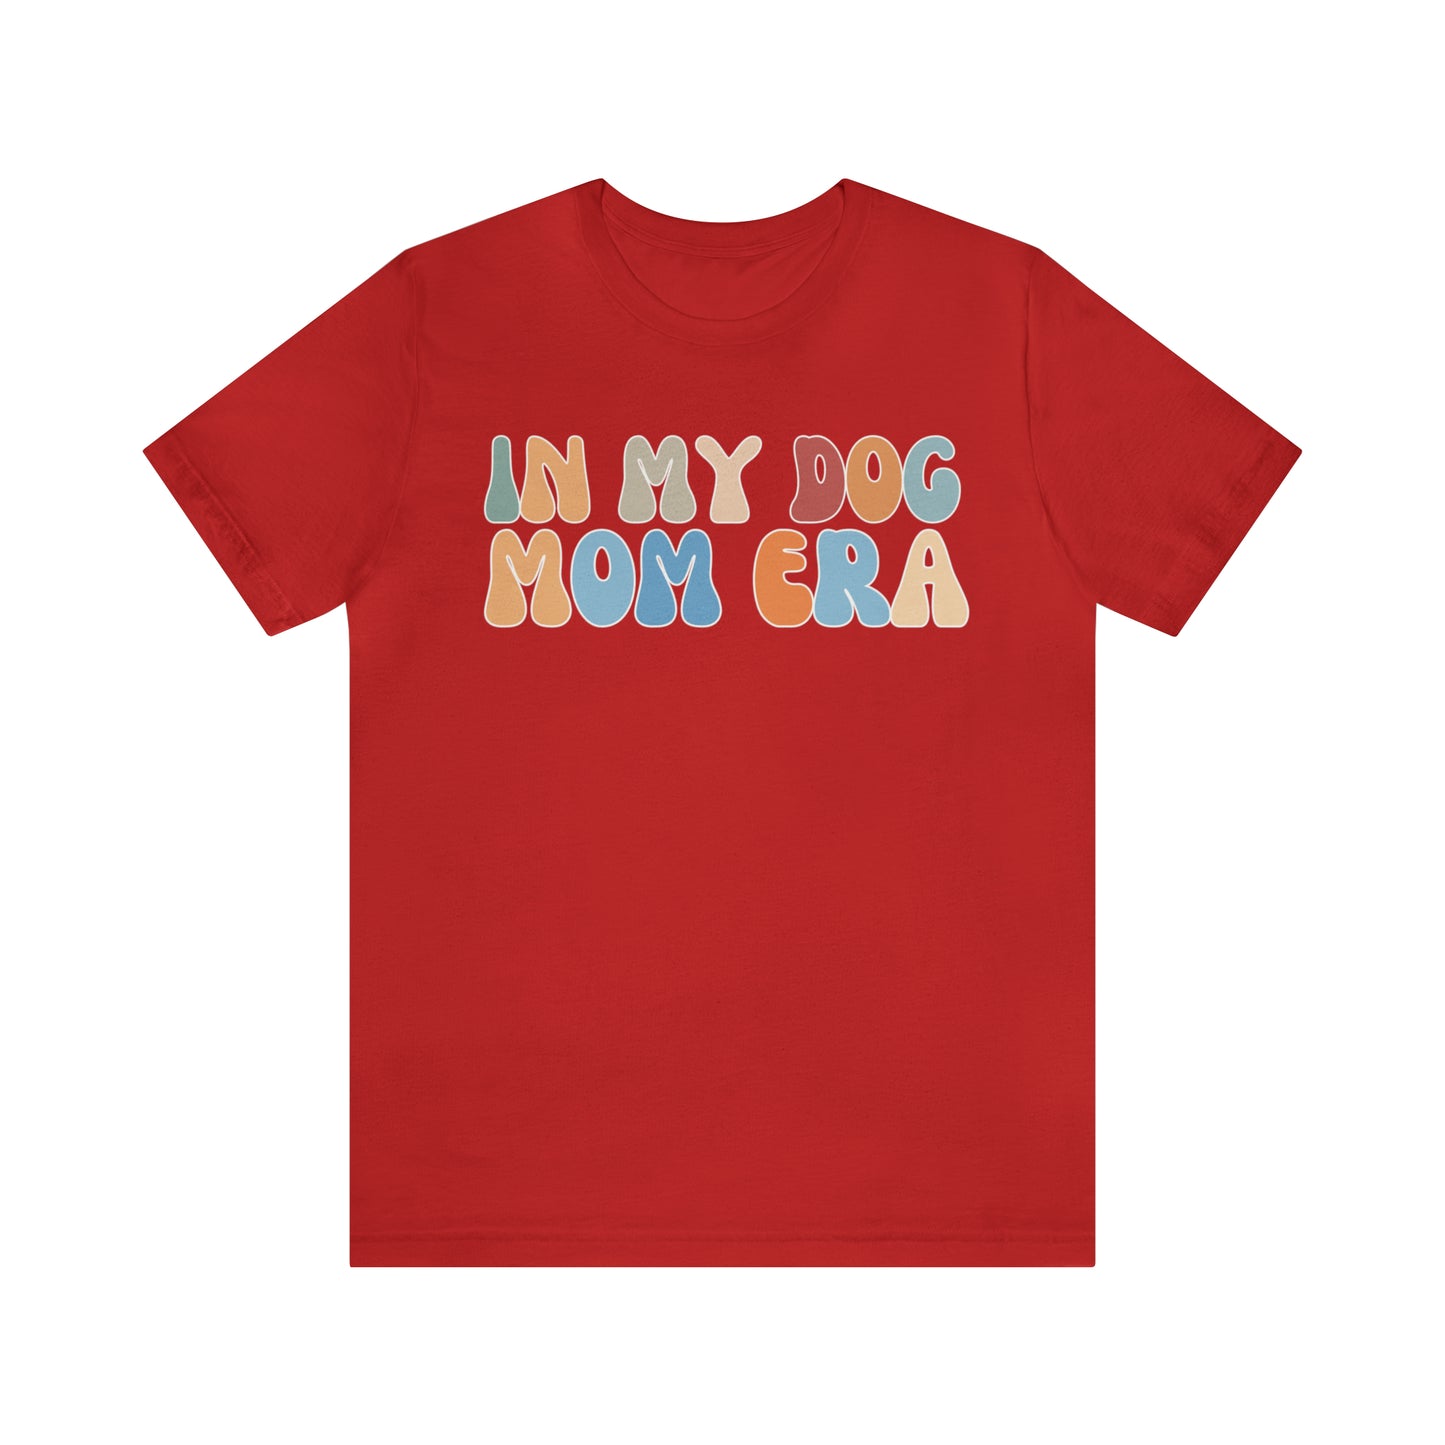 Dog Mom Shirt, In My Dog Mom Era Shirt, Dog Lover Shirt, Fur Mama Shirt, T372